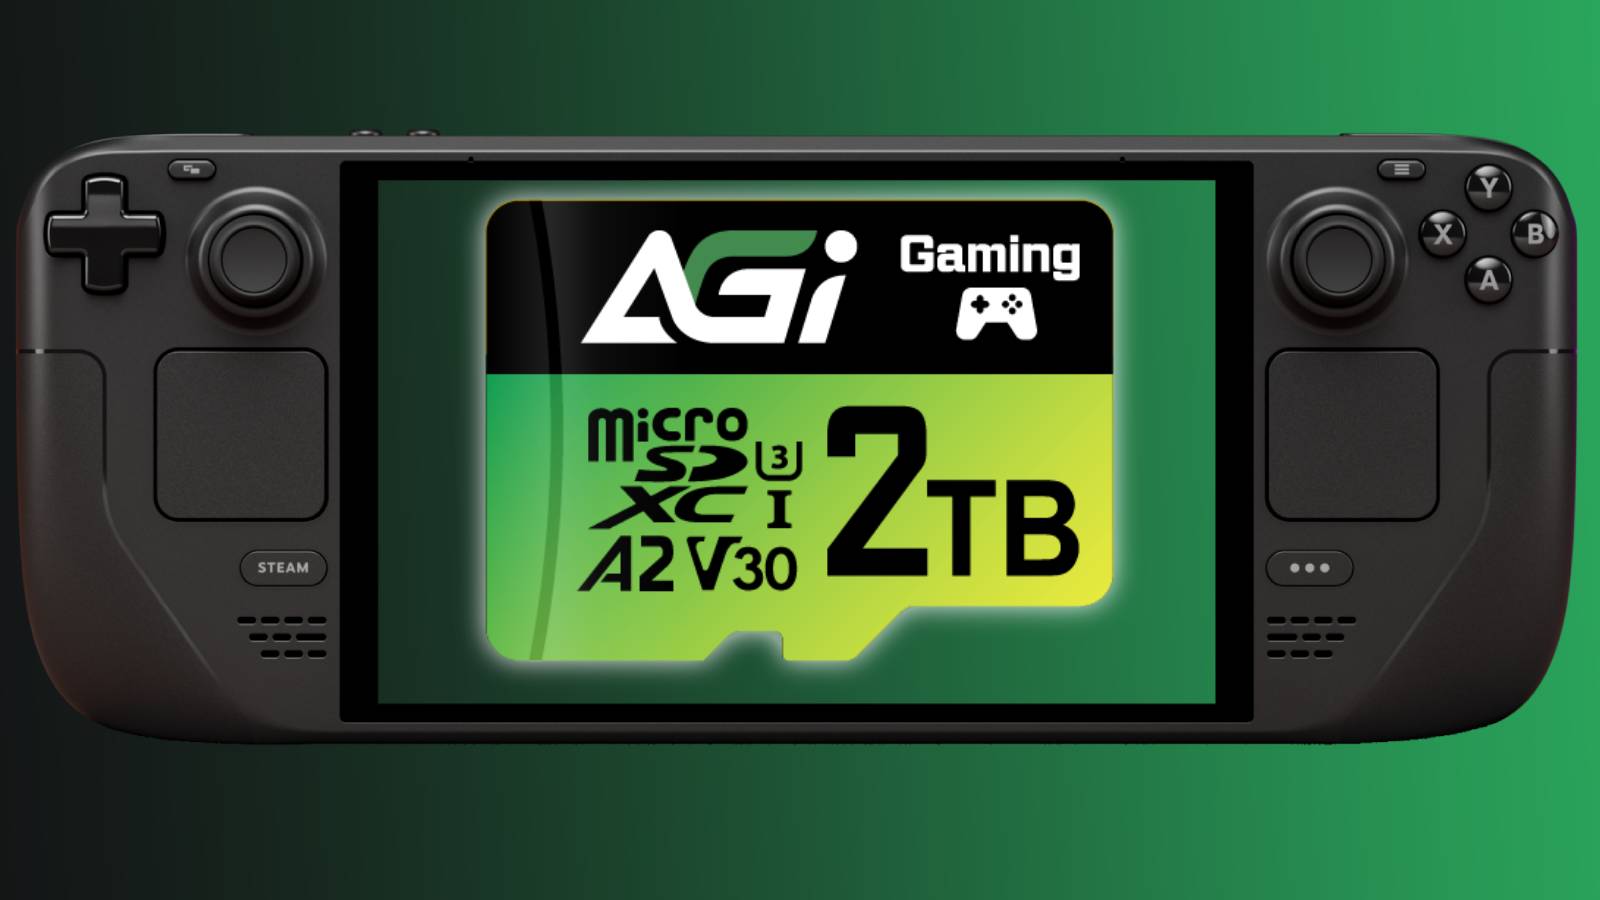 the AGI 2TB microSD card on the screen of the Steam Deck.